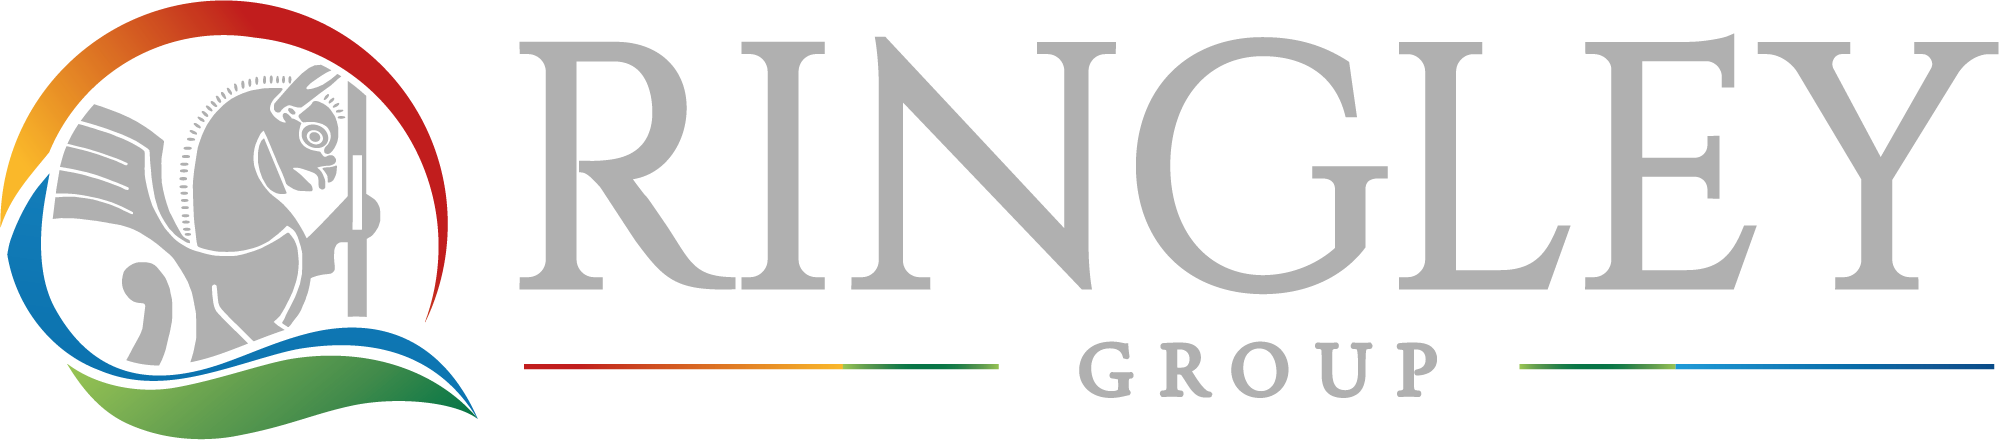 Rinlgley group logo